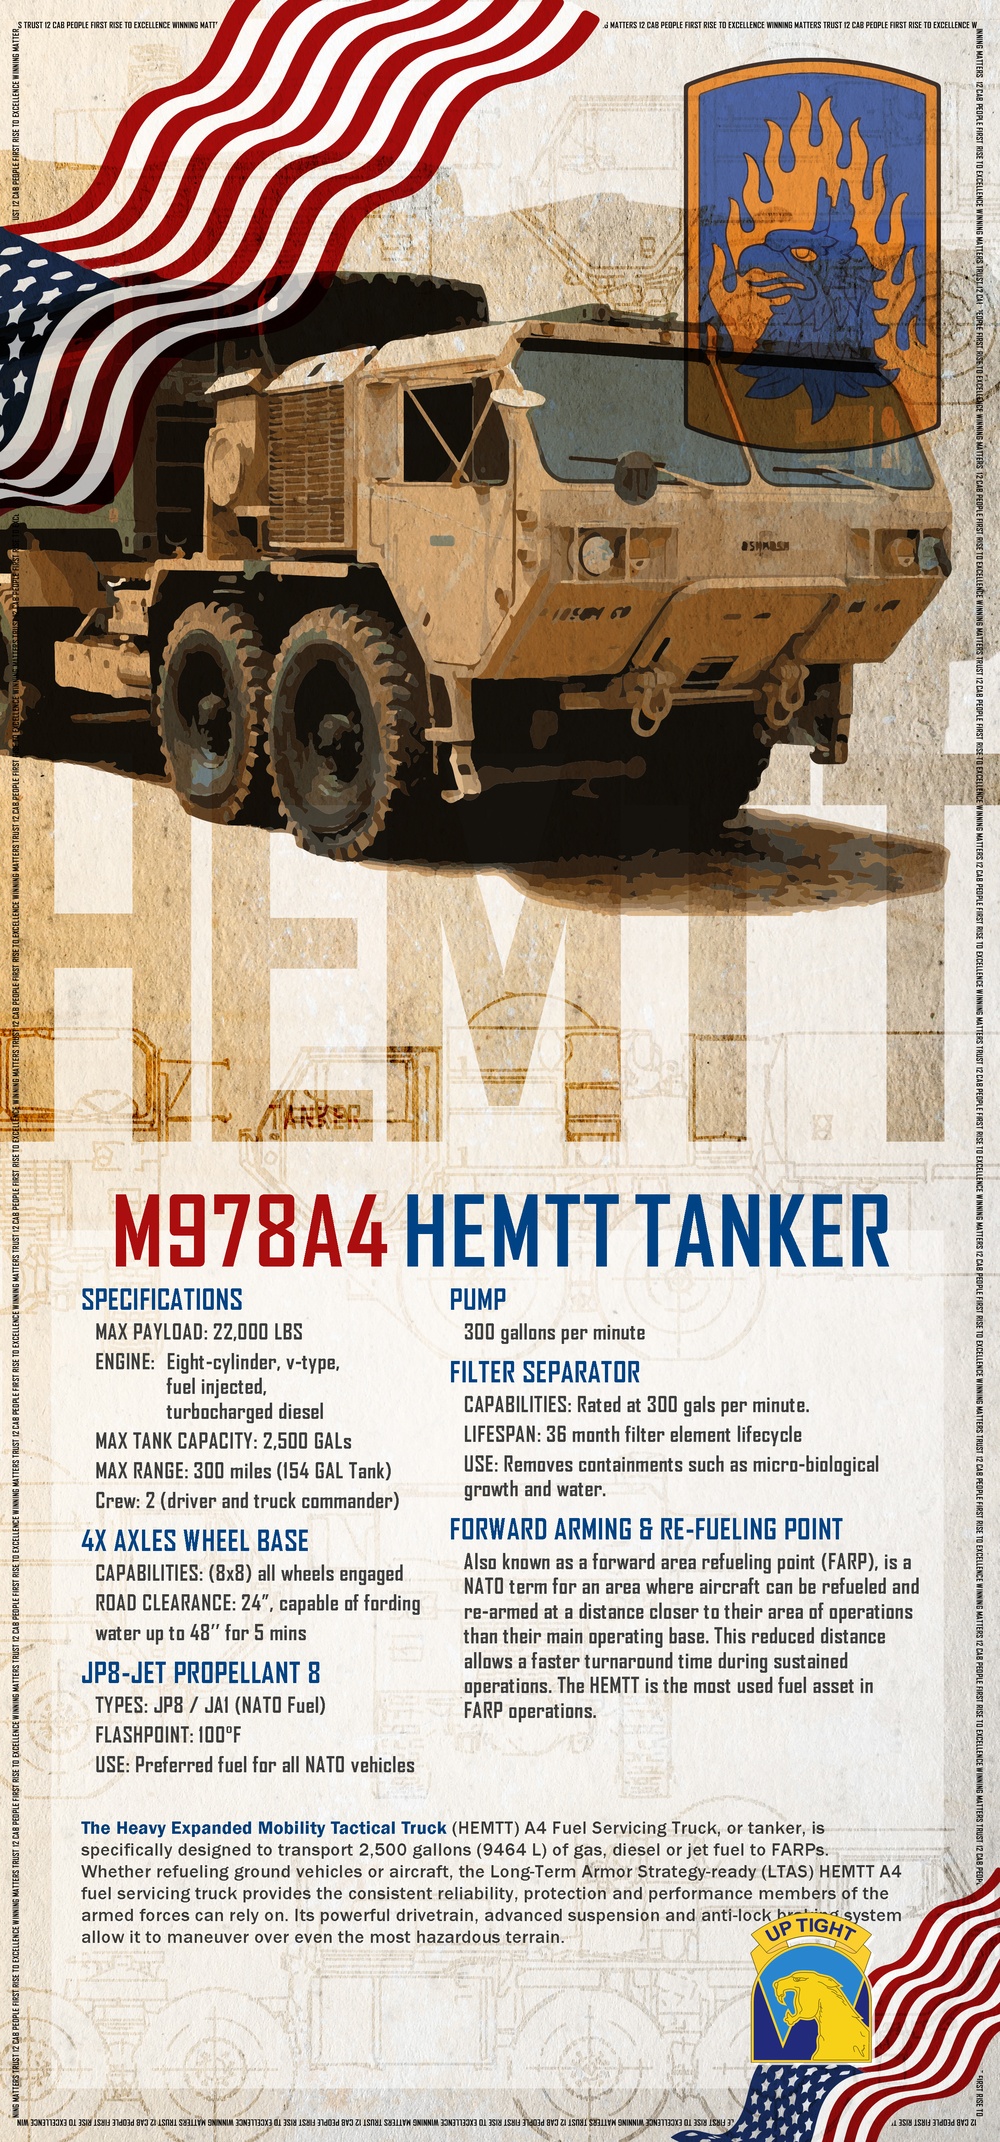 U.S. Army M978A HEMMT Tanker